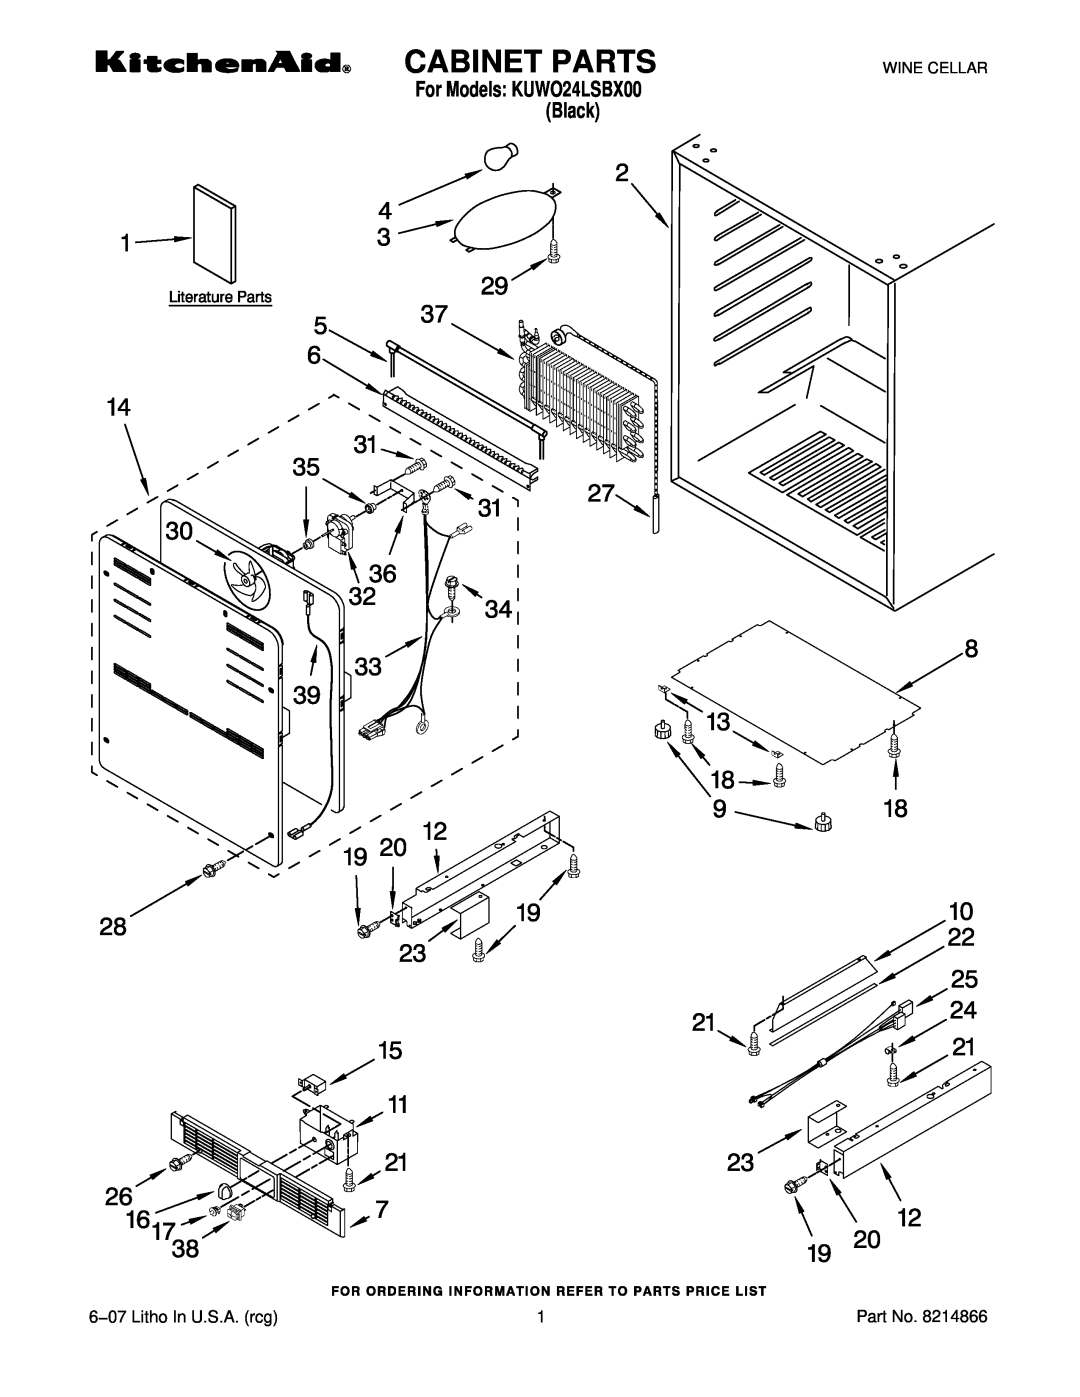 KitchenAid manual Cabinet Parts, 6−07 Litho In U.S.A. rcg, For Models KUWO24LSBX00 Black, Wine Cellar 